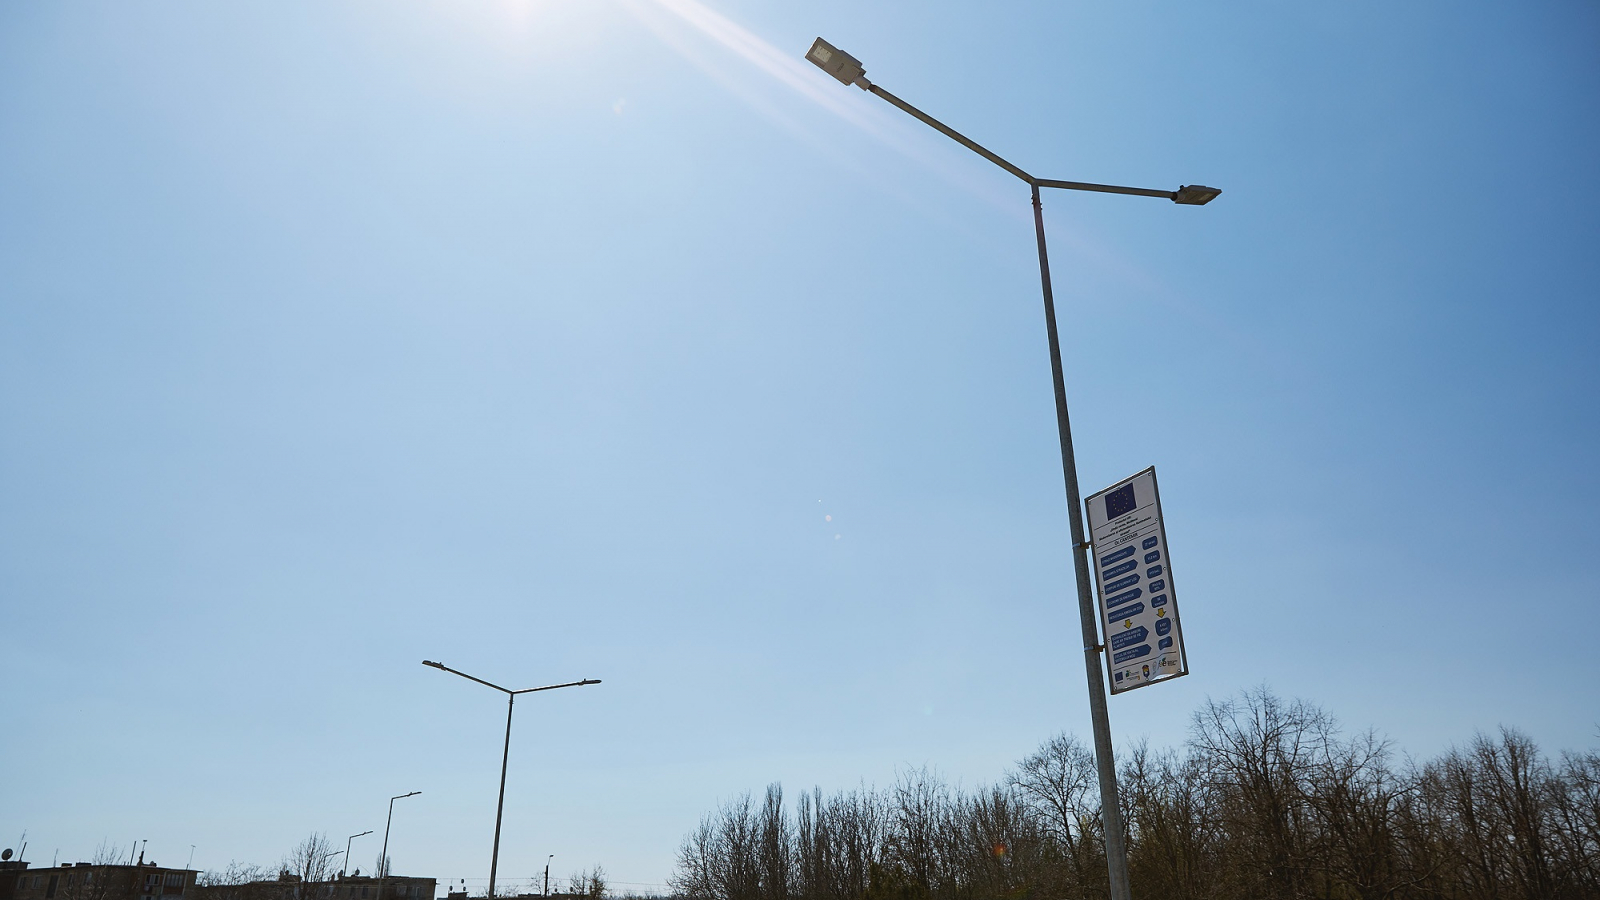 Moldova: Cities of Cantemir and Ocnița receive energy-efficient street lighting thanks to EU